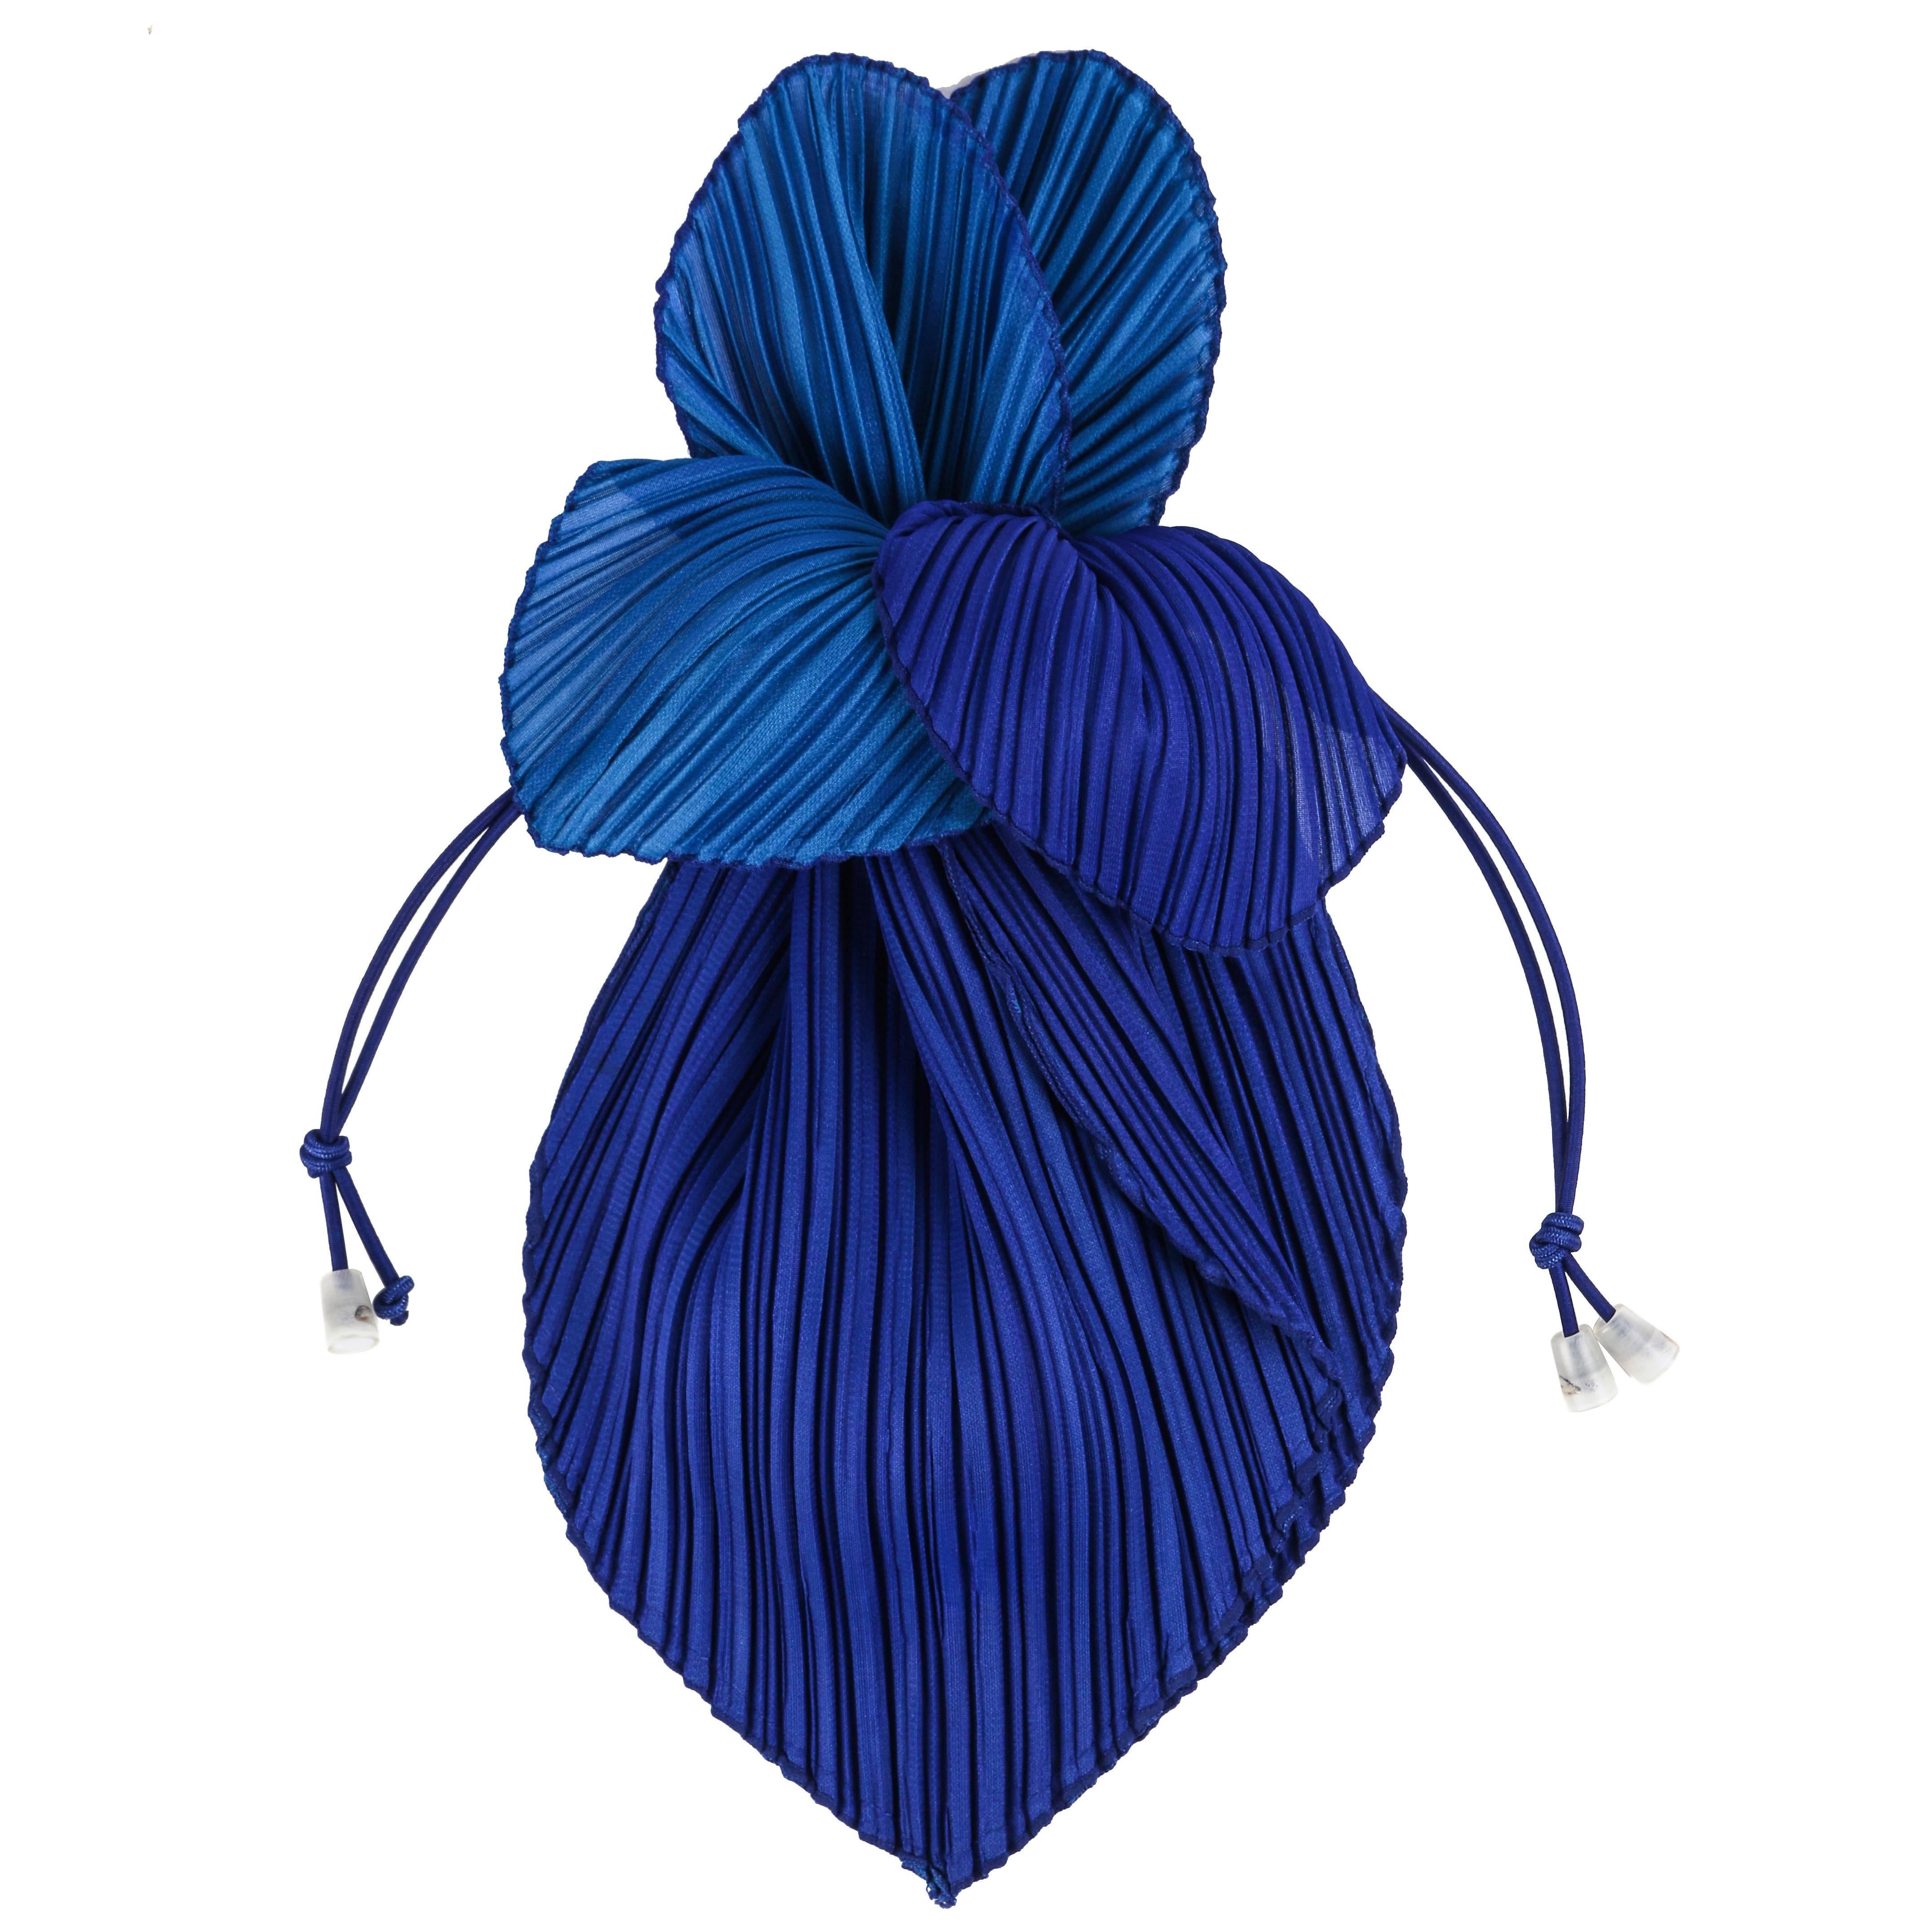 ISSEY MIYAKE "Pleats Please" Royal Blue Pleated Drawstring Clutch Handbag Purse